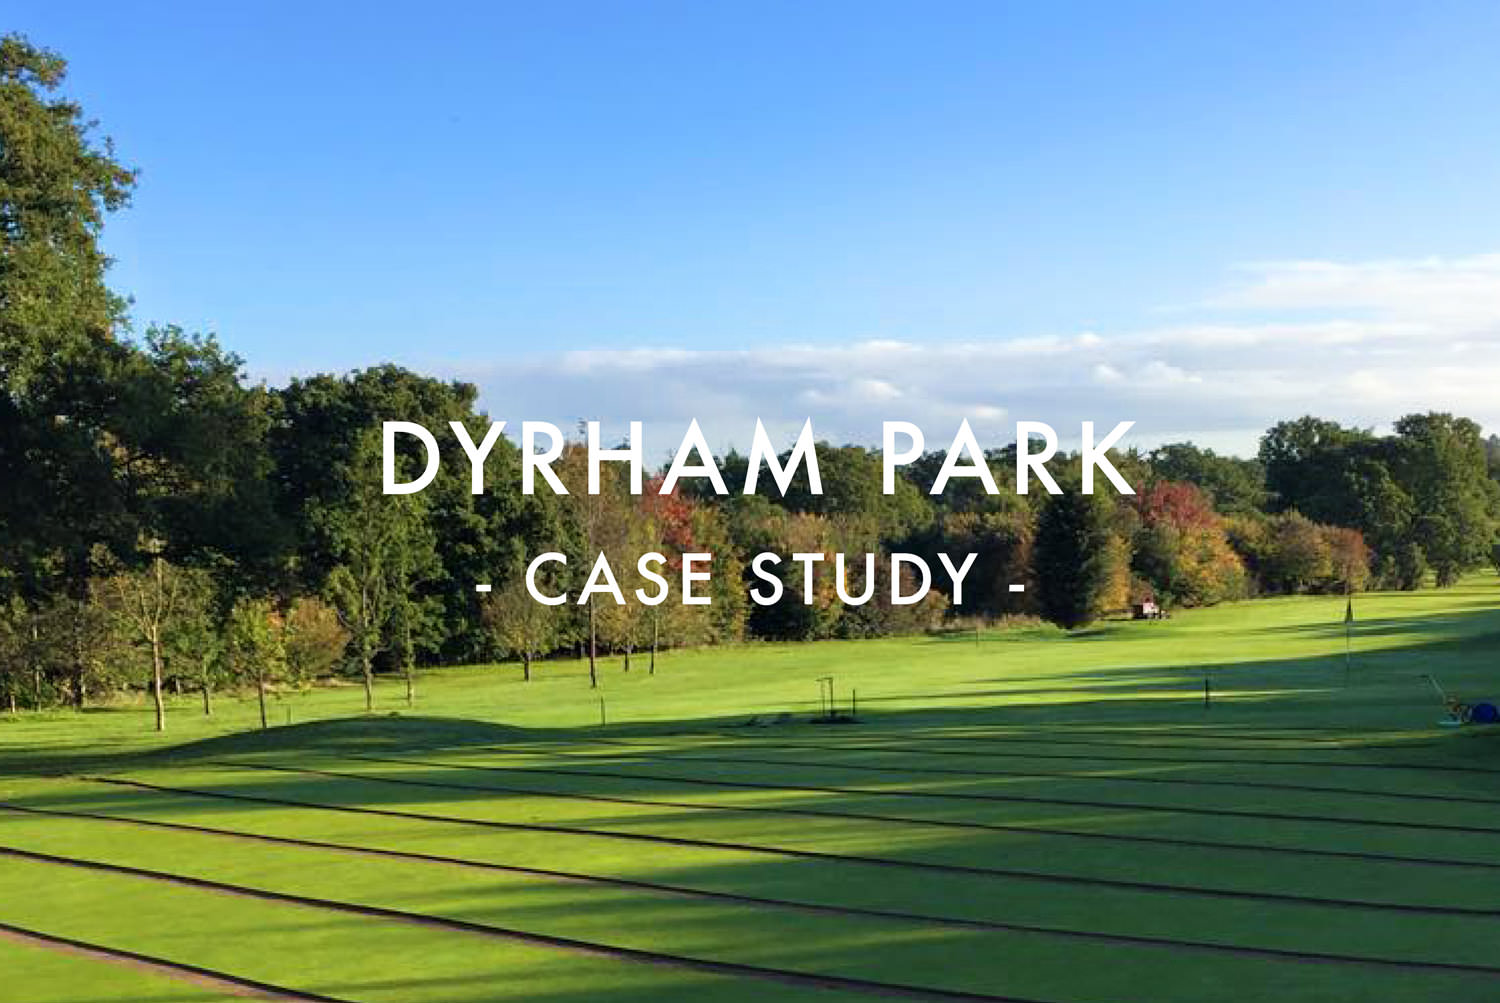 Dyrham Park Greens Drainage Case Study